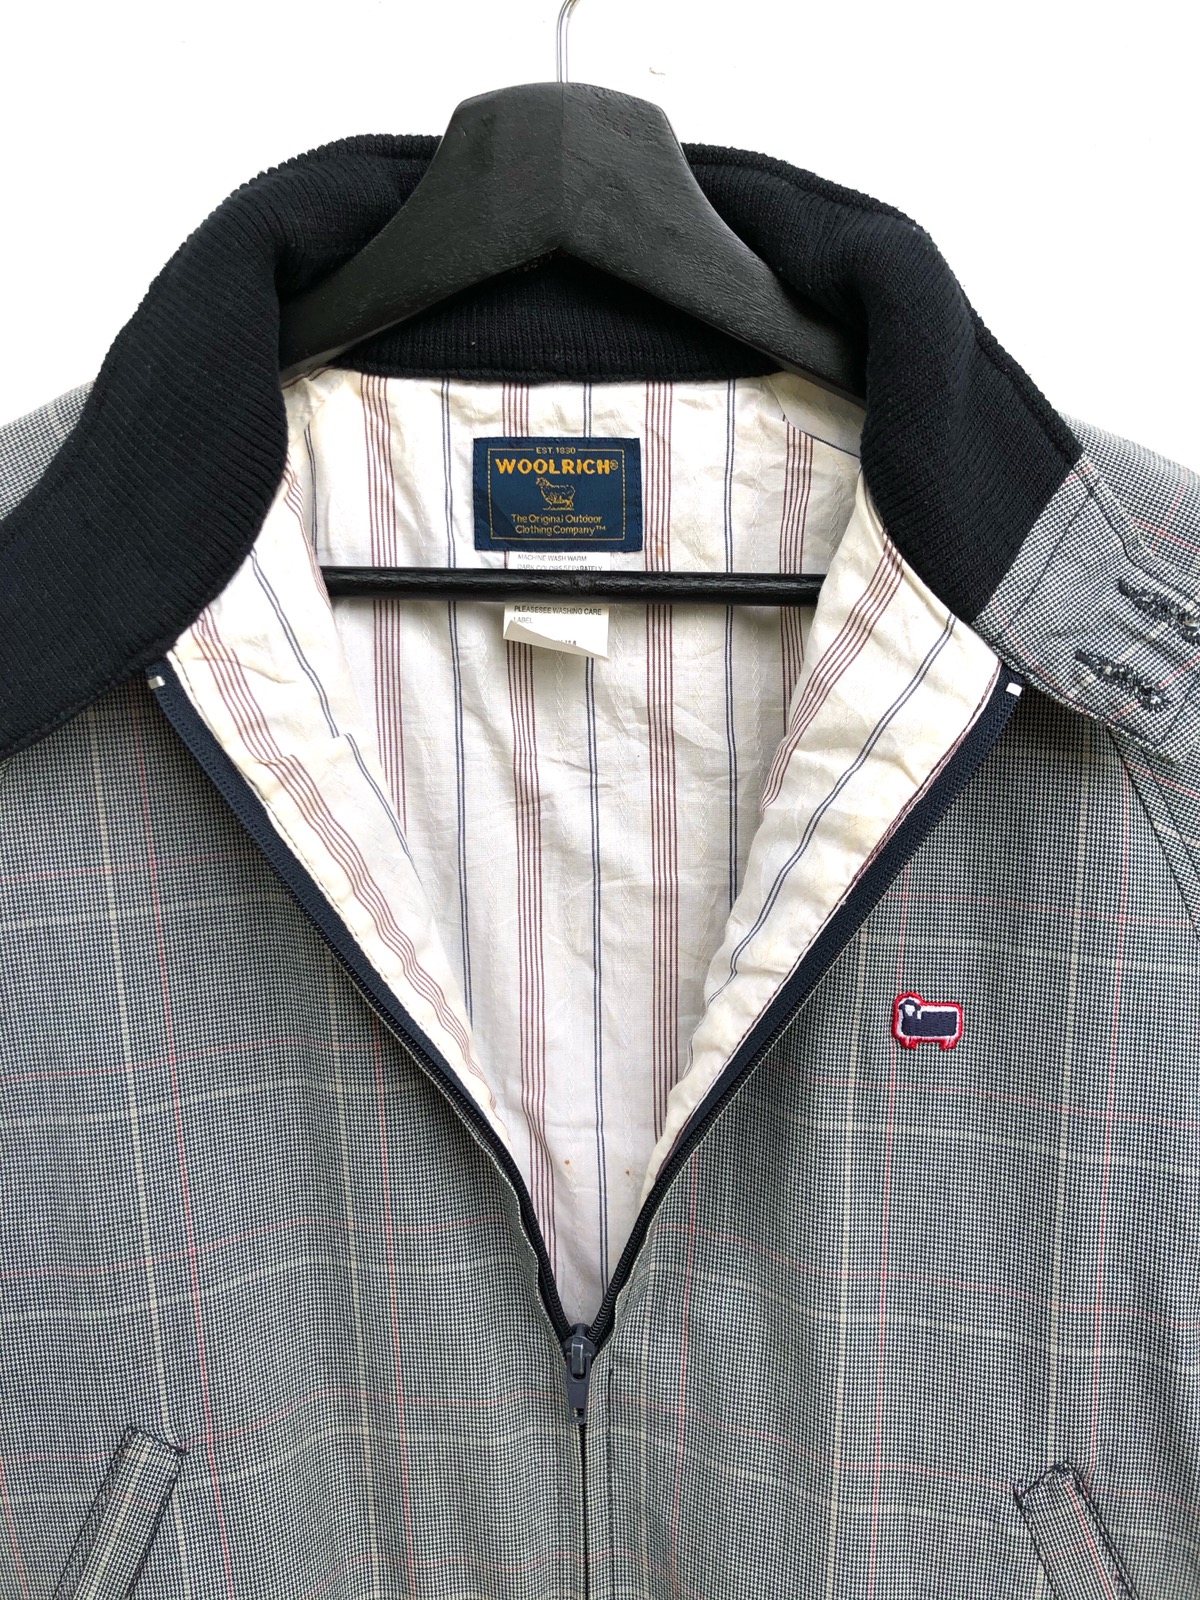 Woolrich John Rich & Bros. - Checkered Harrington Jacket - 3